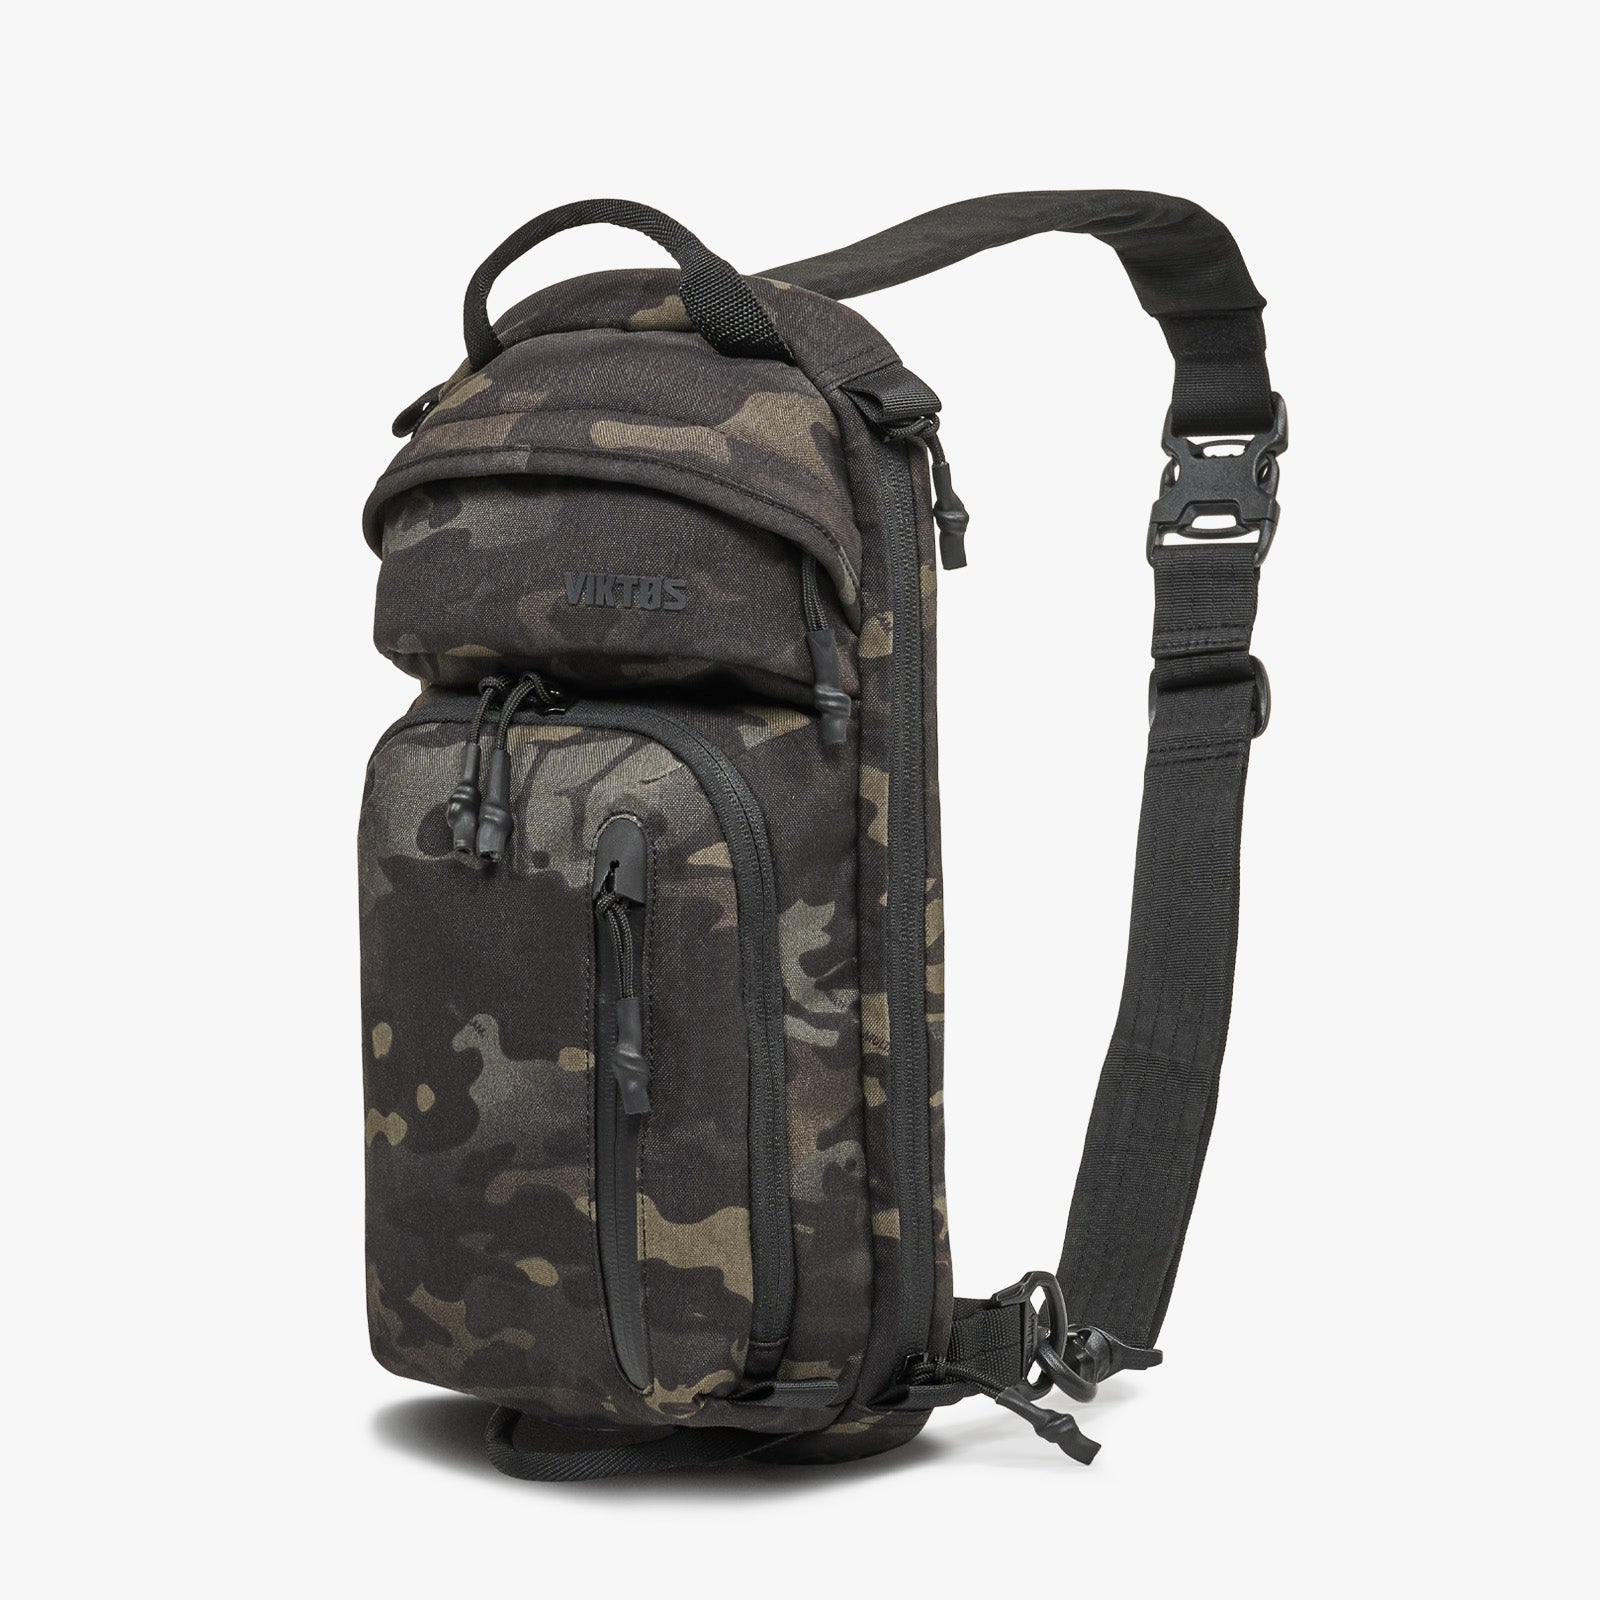 VIKTOS Upscale 3 Sling Bag Bags, Packs and Cases VIKTOS Black Multicam Tactical Gear Supplier Tactical Distributors Australia